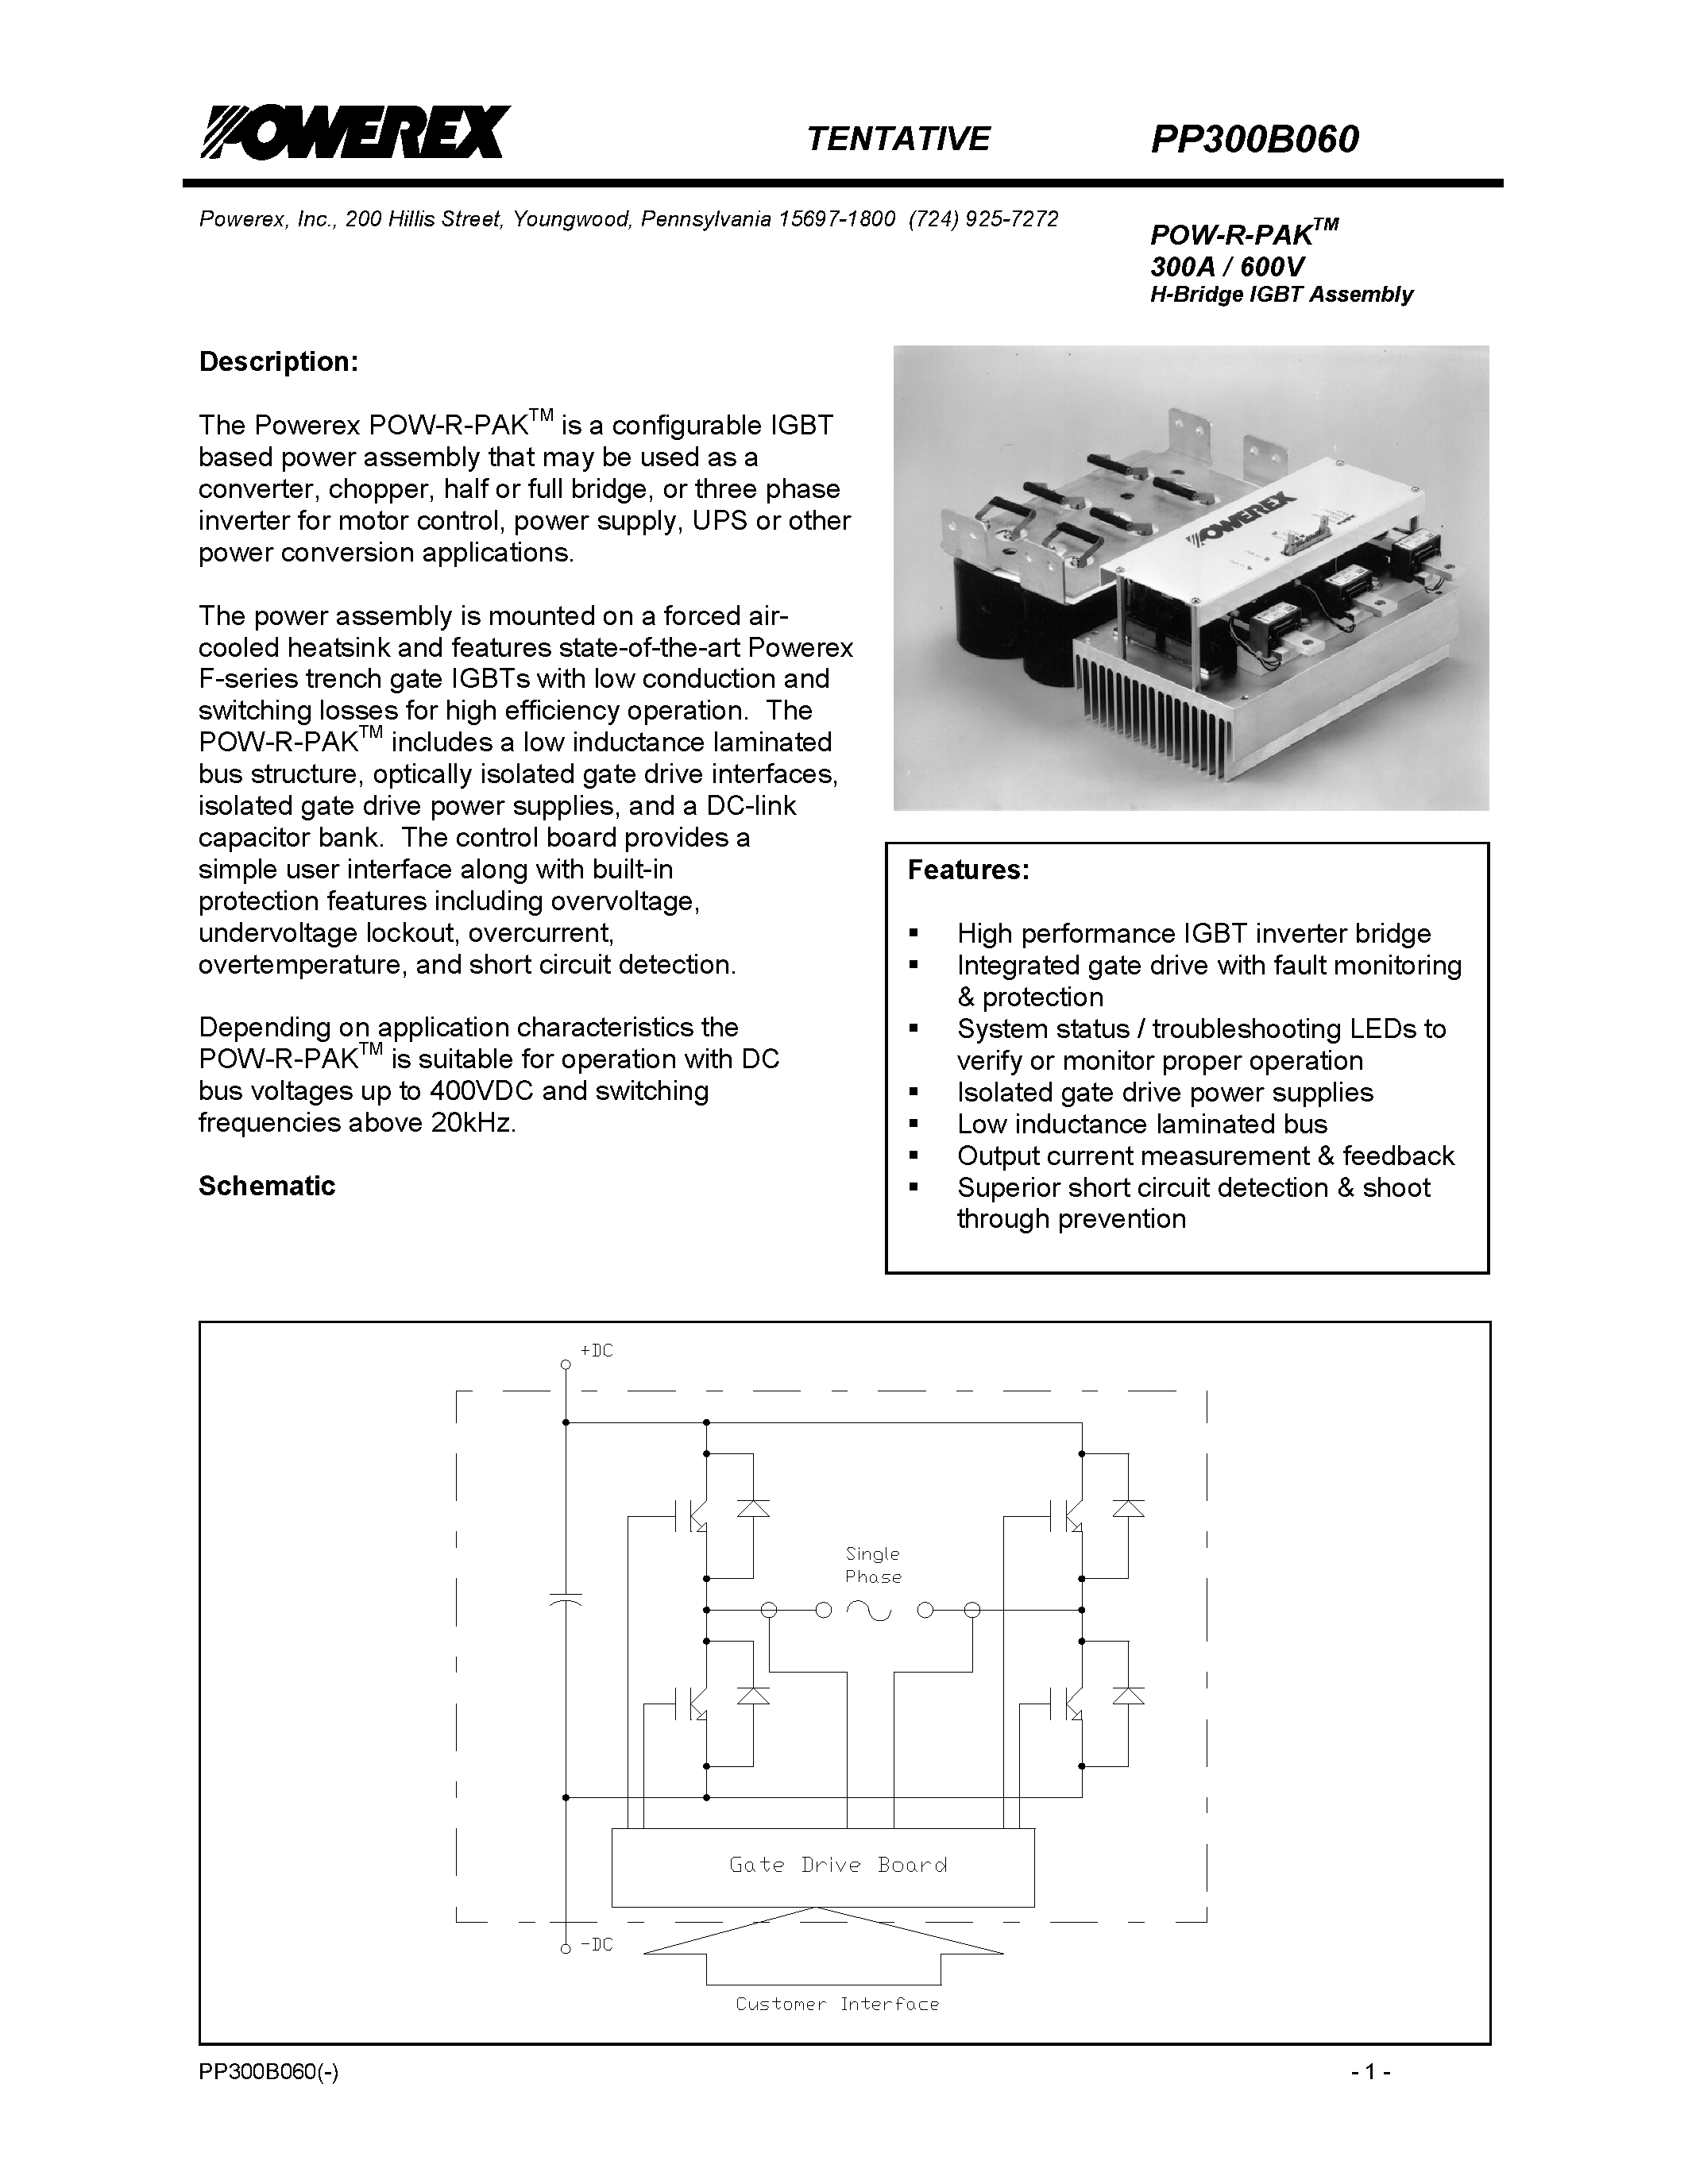 Даташит PP300B060 - POW-R-PAK 300A / 600V H-Bridge IGBT Assembly страница 1